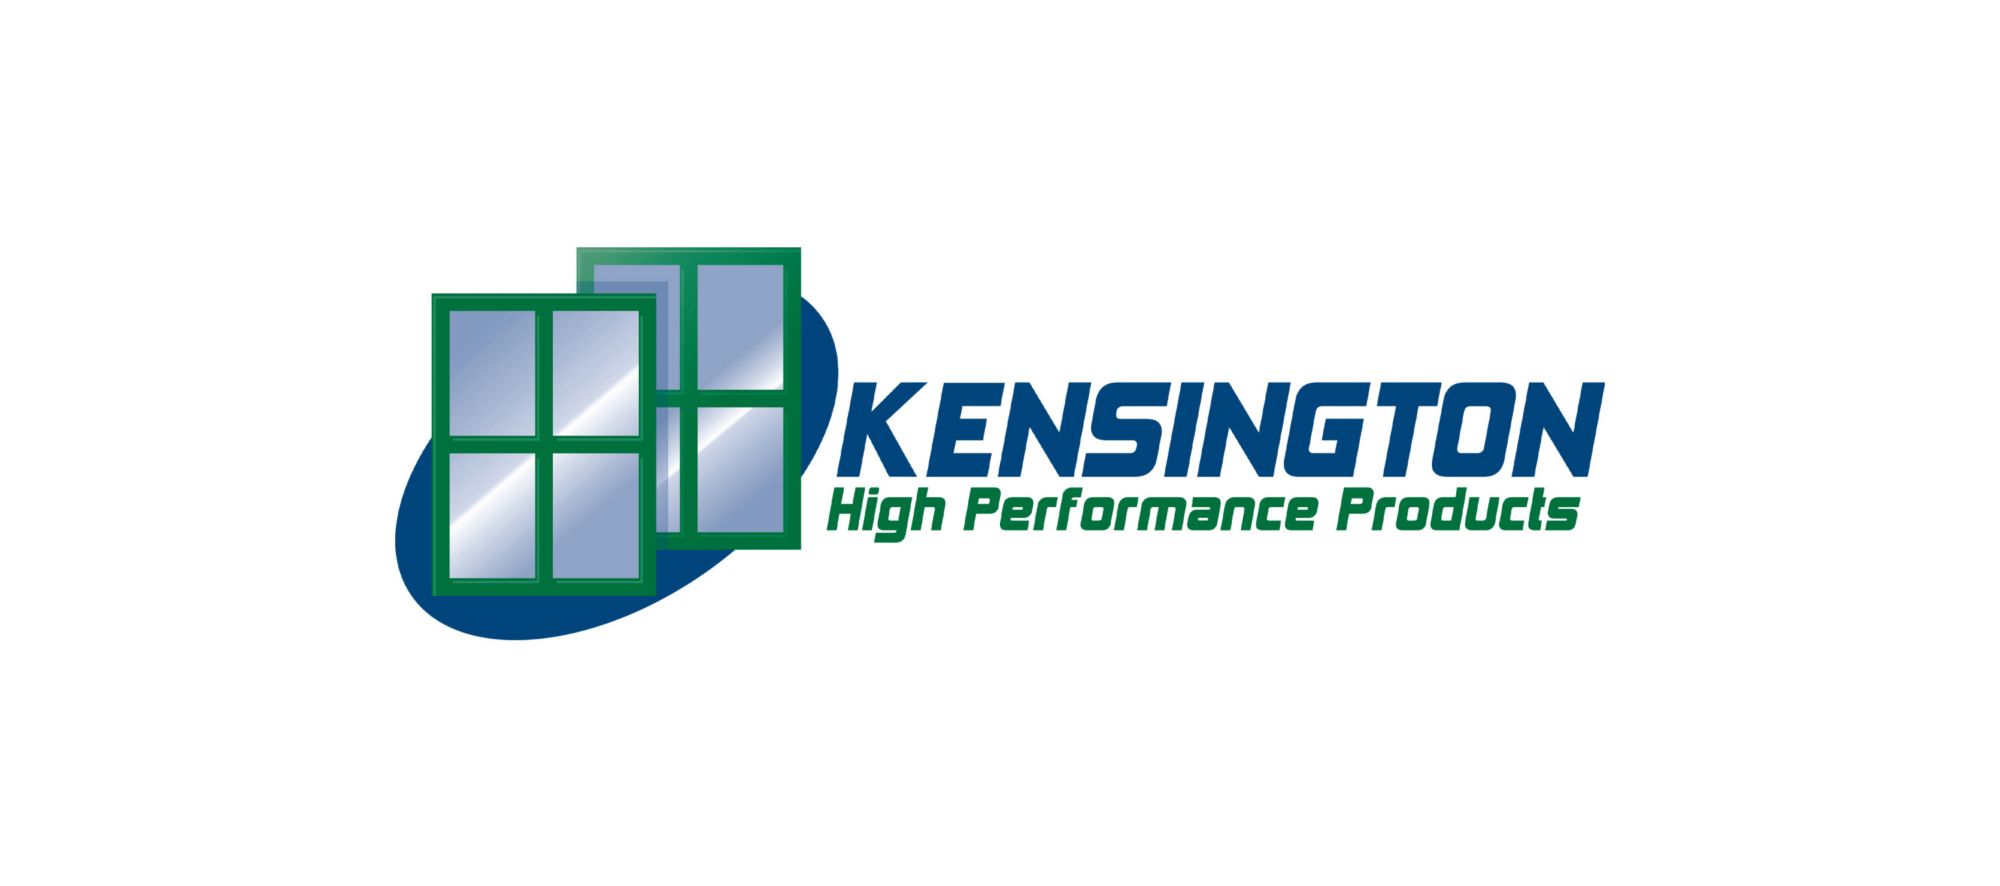 Kensington High Performance Products logo 